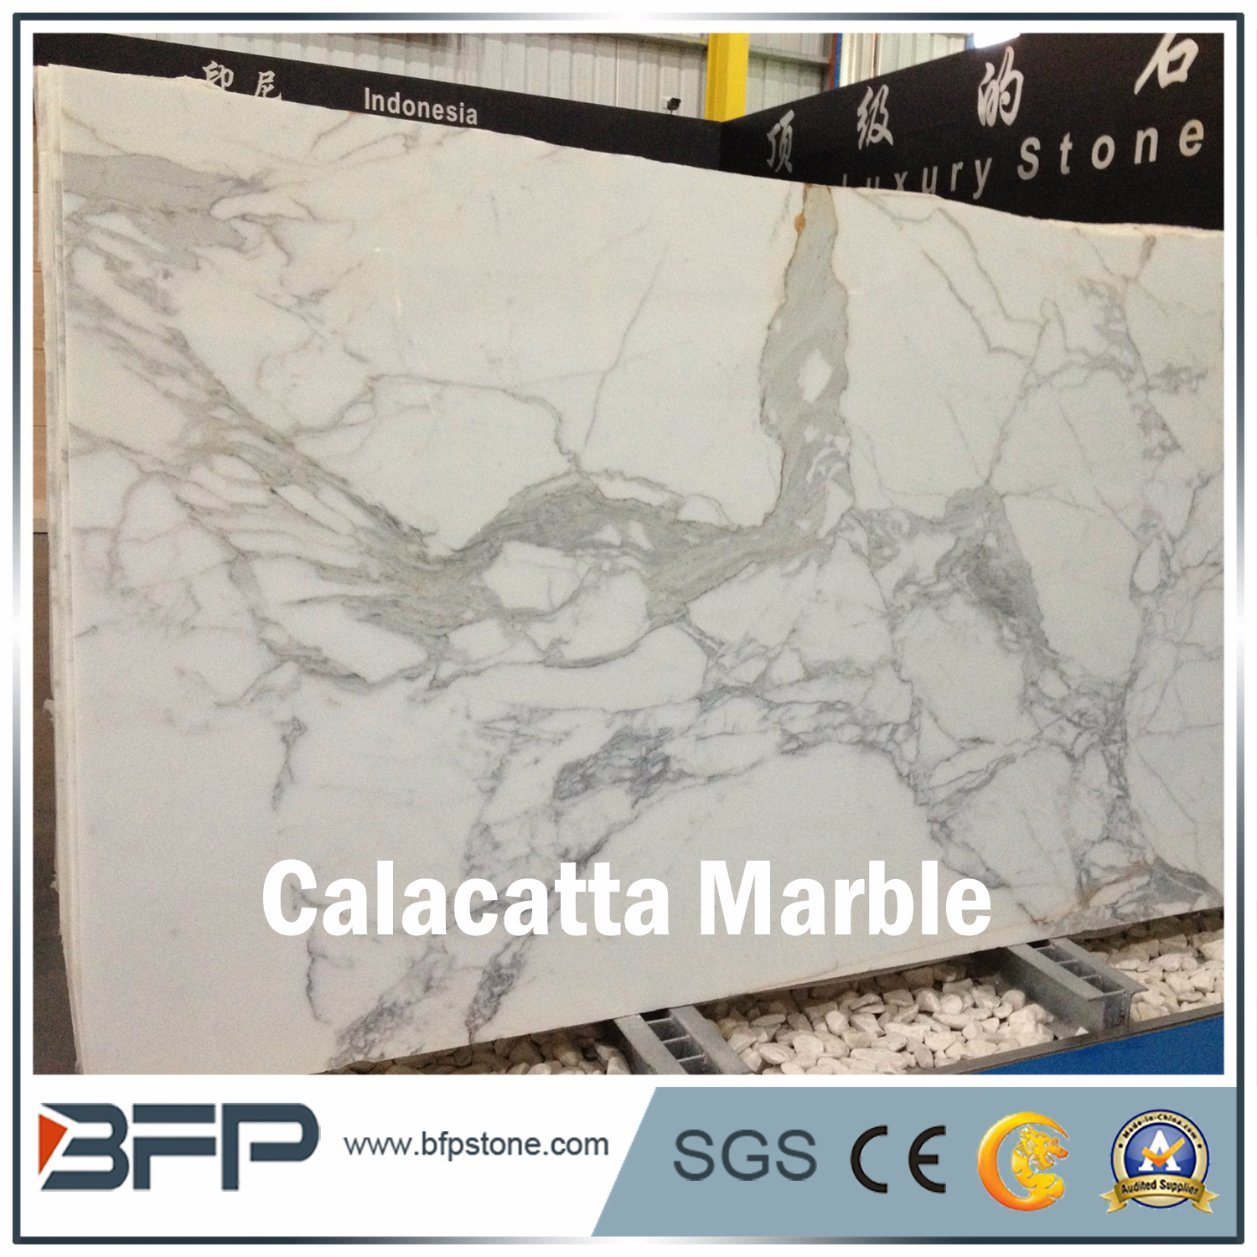 High Eend Calacatta Marble Slab for Bathroom Tile and Countertop